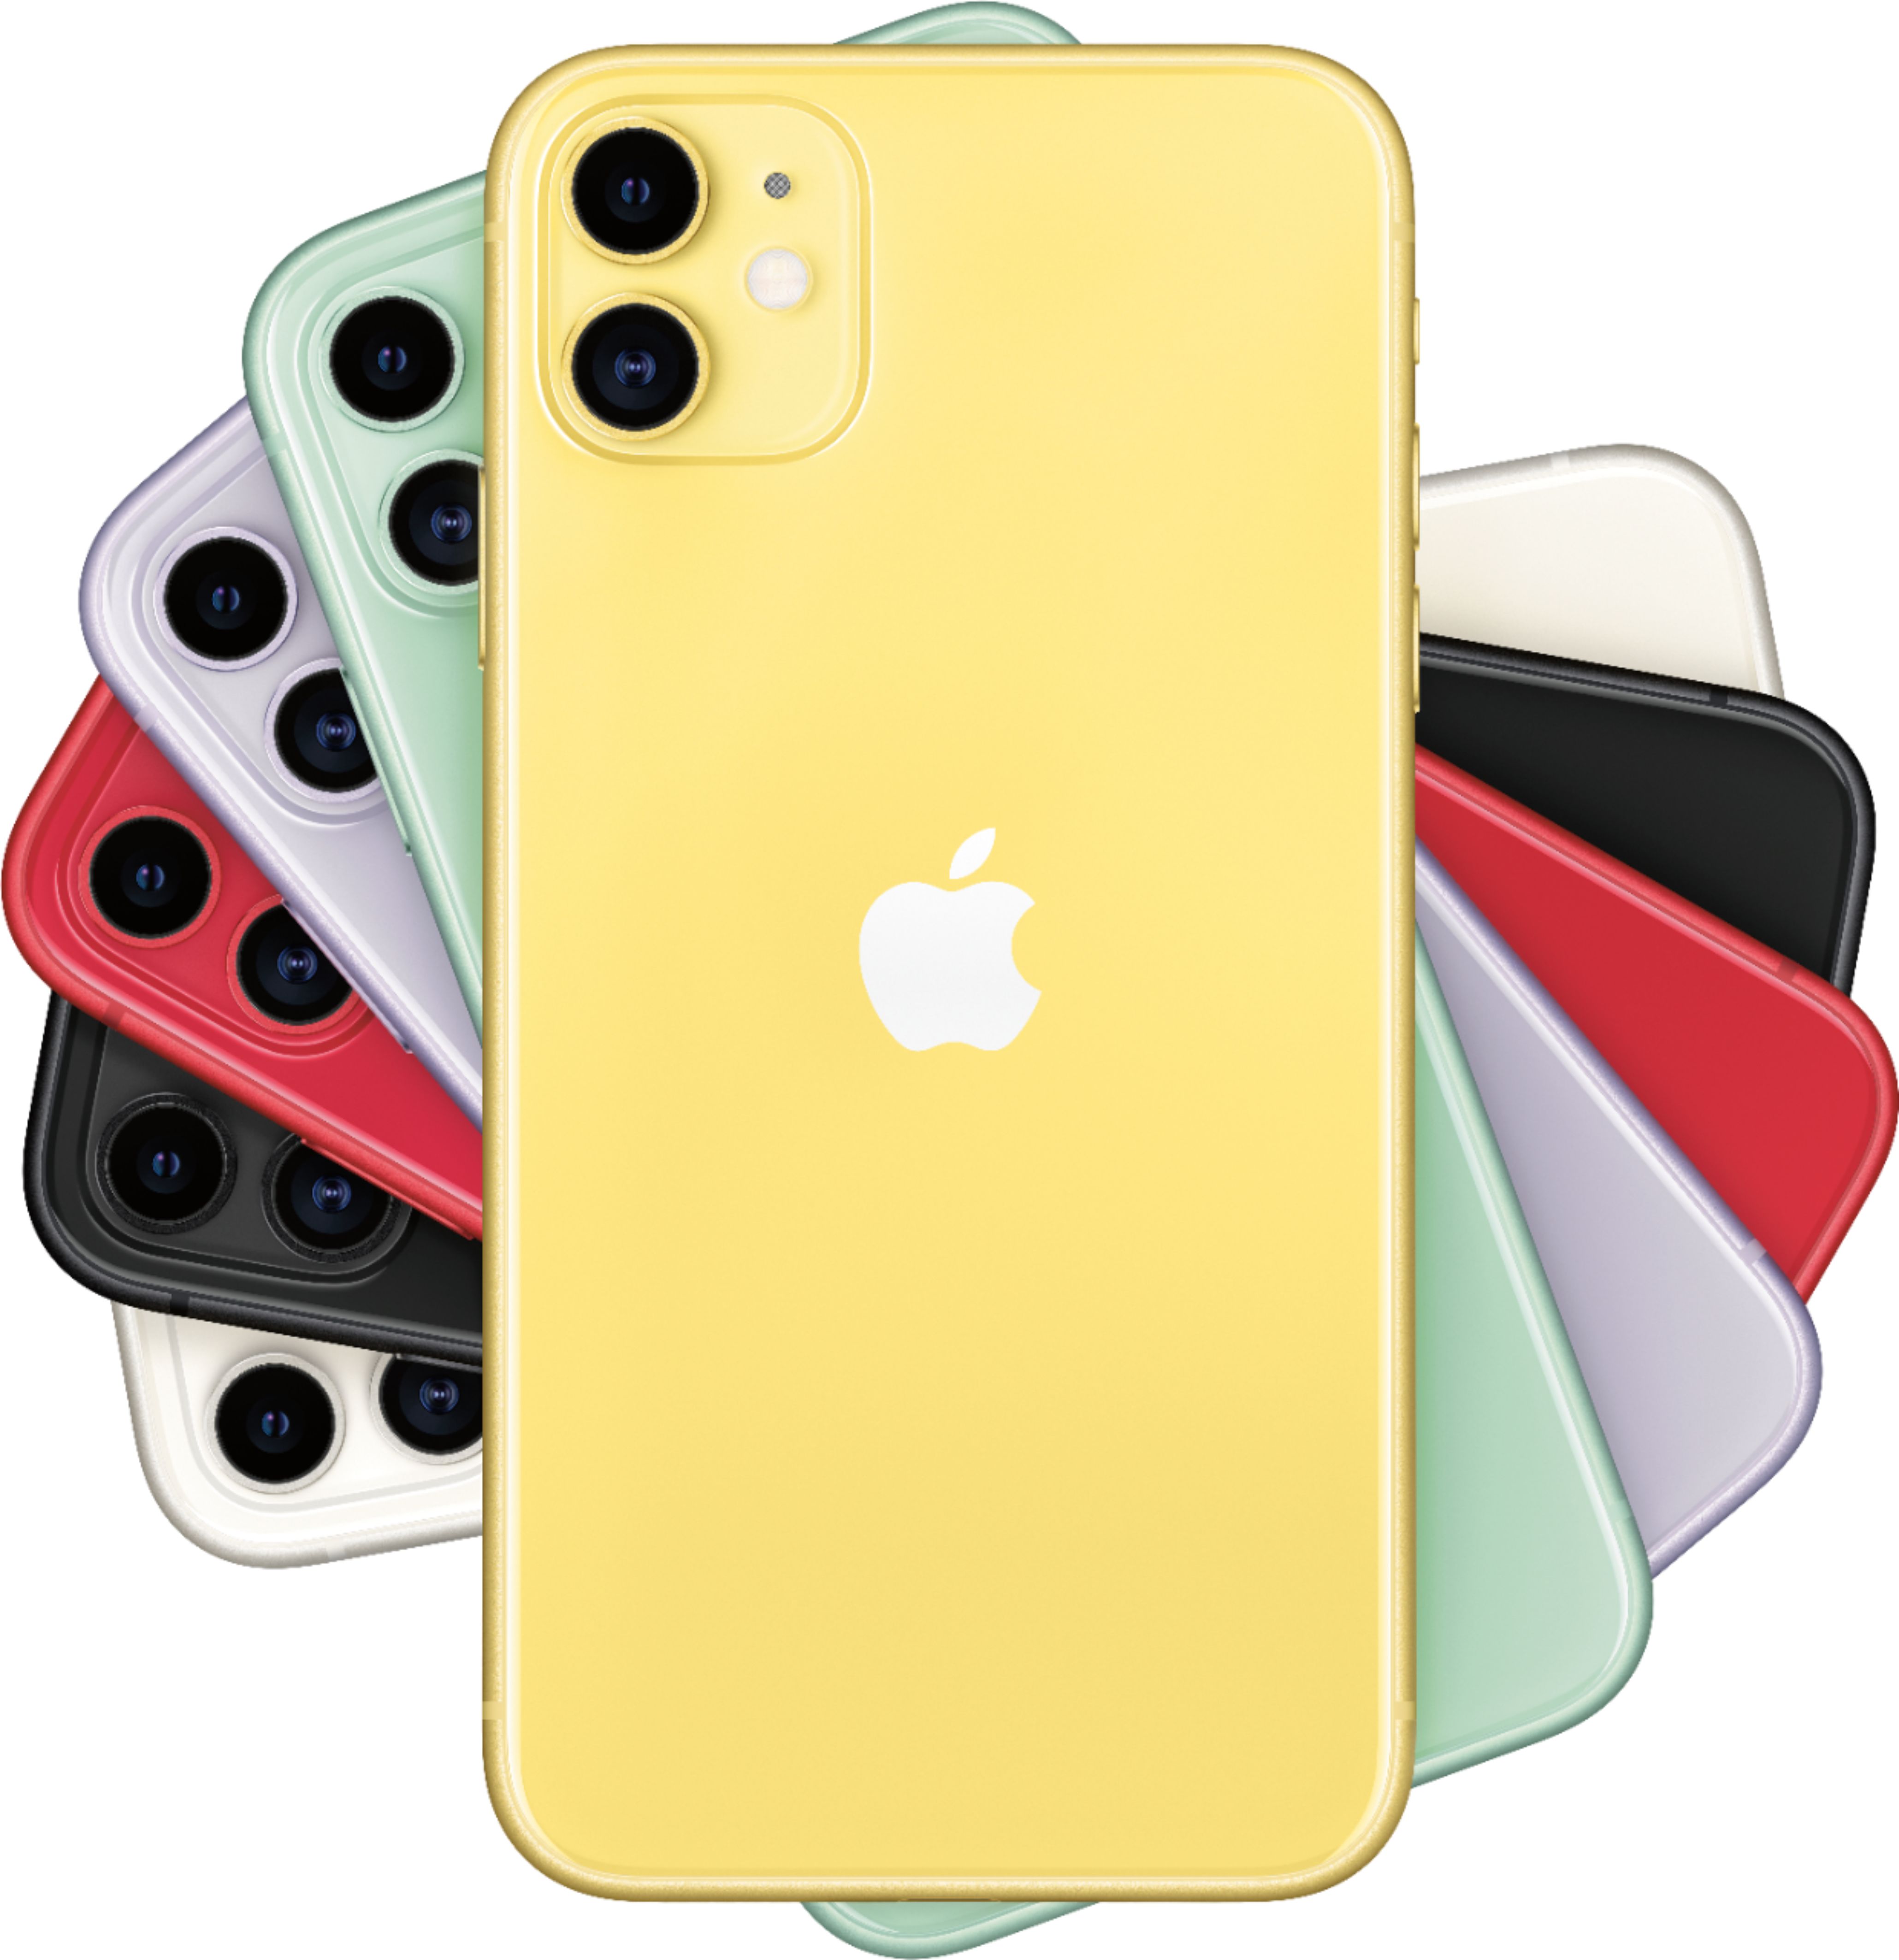 Apple iPhone 11 256GB Yellow (Sprint) MWLP2LL/A - Best Buy